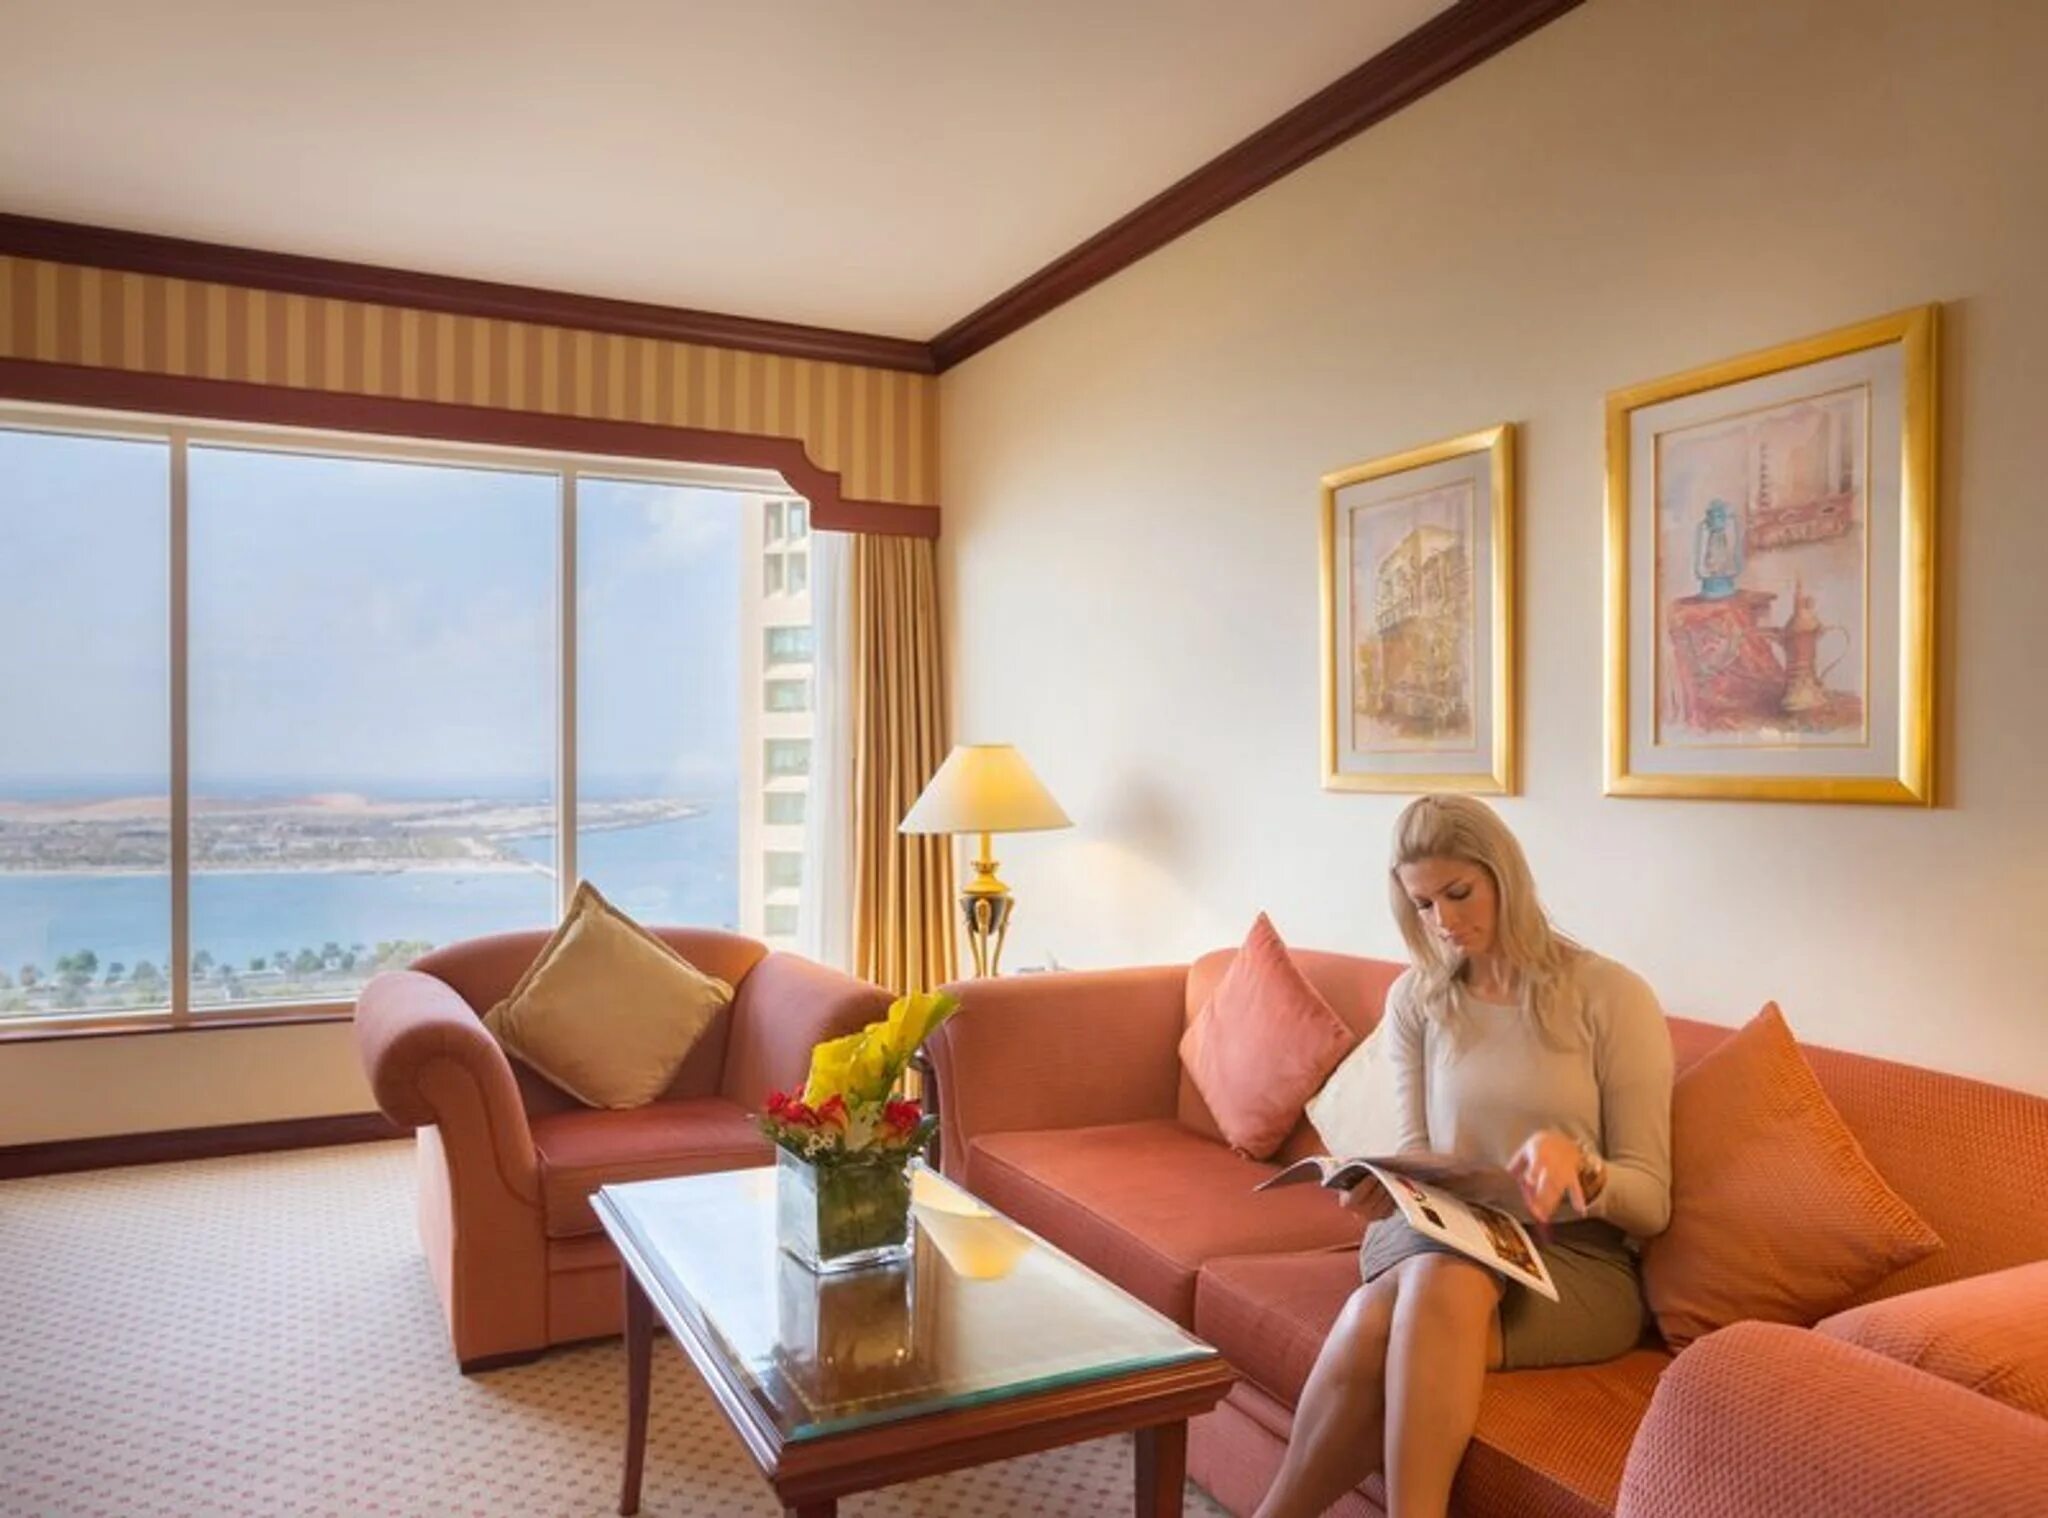 Корниш отель Абу Даби. Corniche Hotel Abu Dhabi 5*, ОАЭ. Конрич отель Абу Даби. Radisson Blu Hotel & Resort Abu Dhabi Corniche 5* пляж.